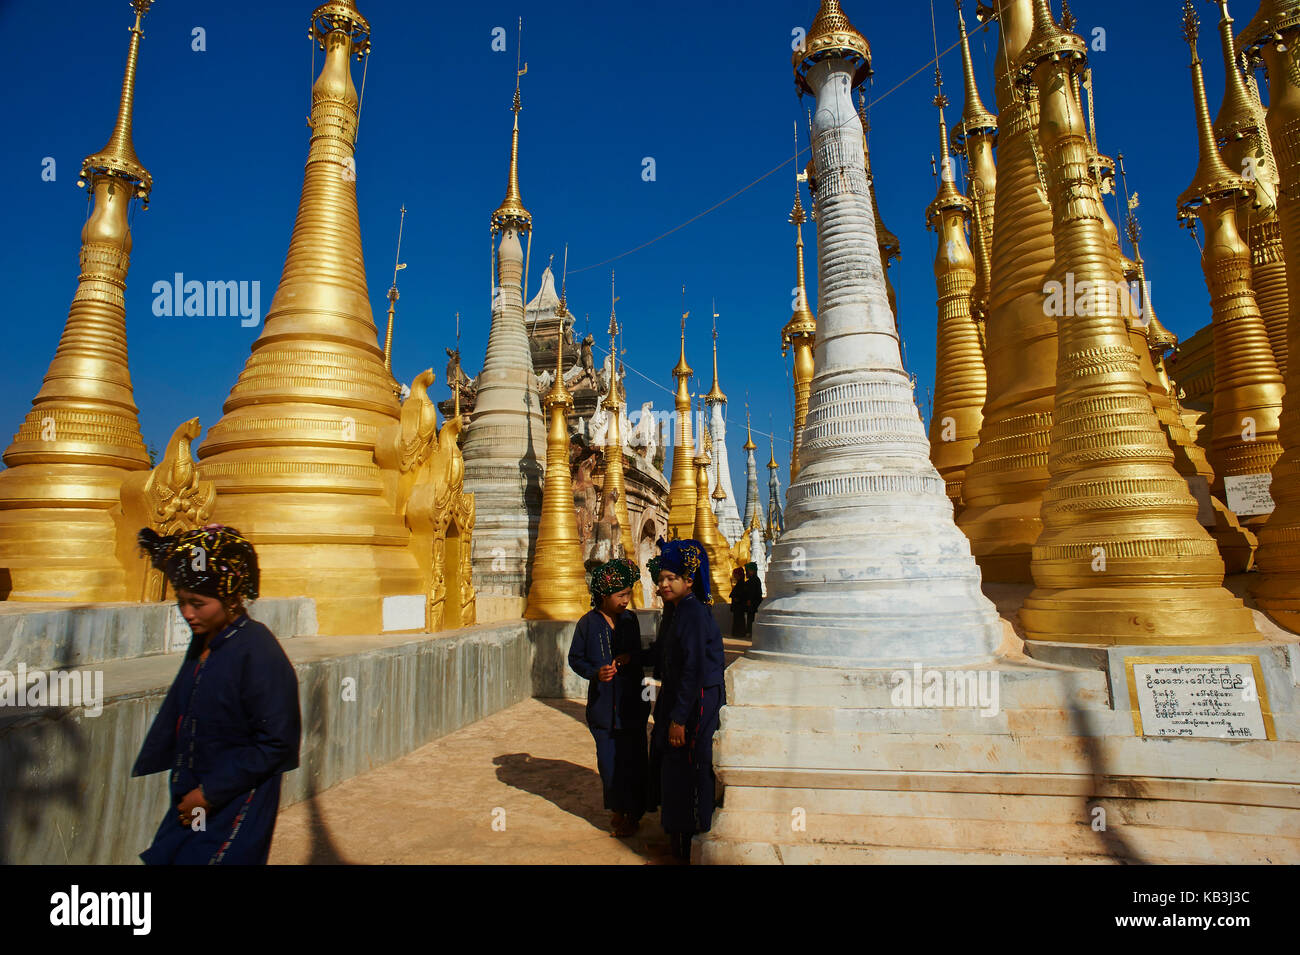 Shwe Inn Thein Tempel, Myanmar, Asia, Stock Photo